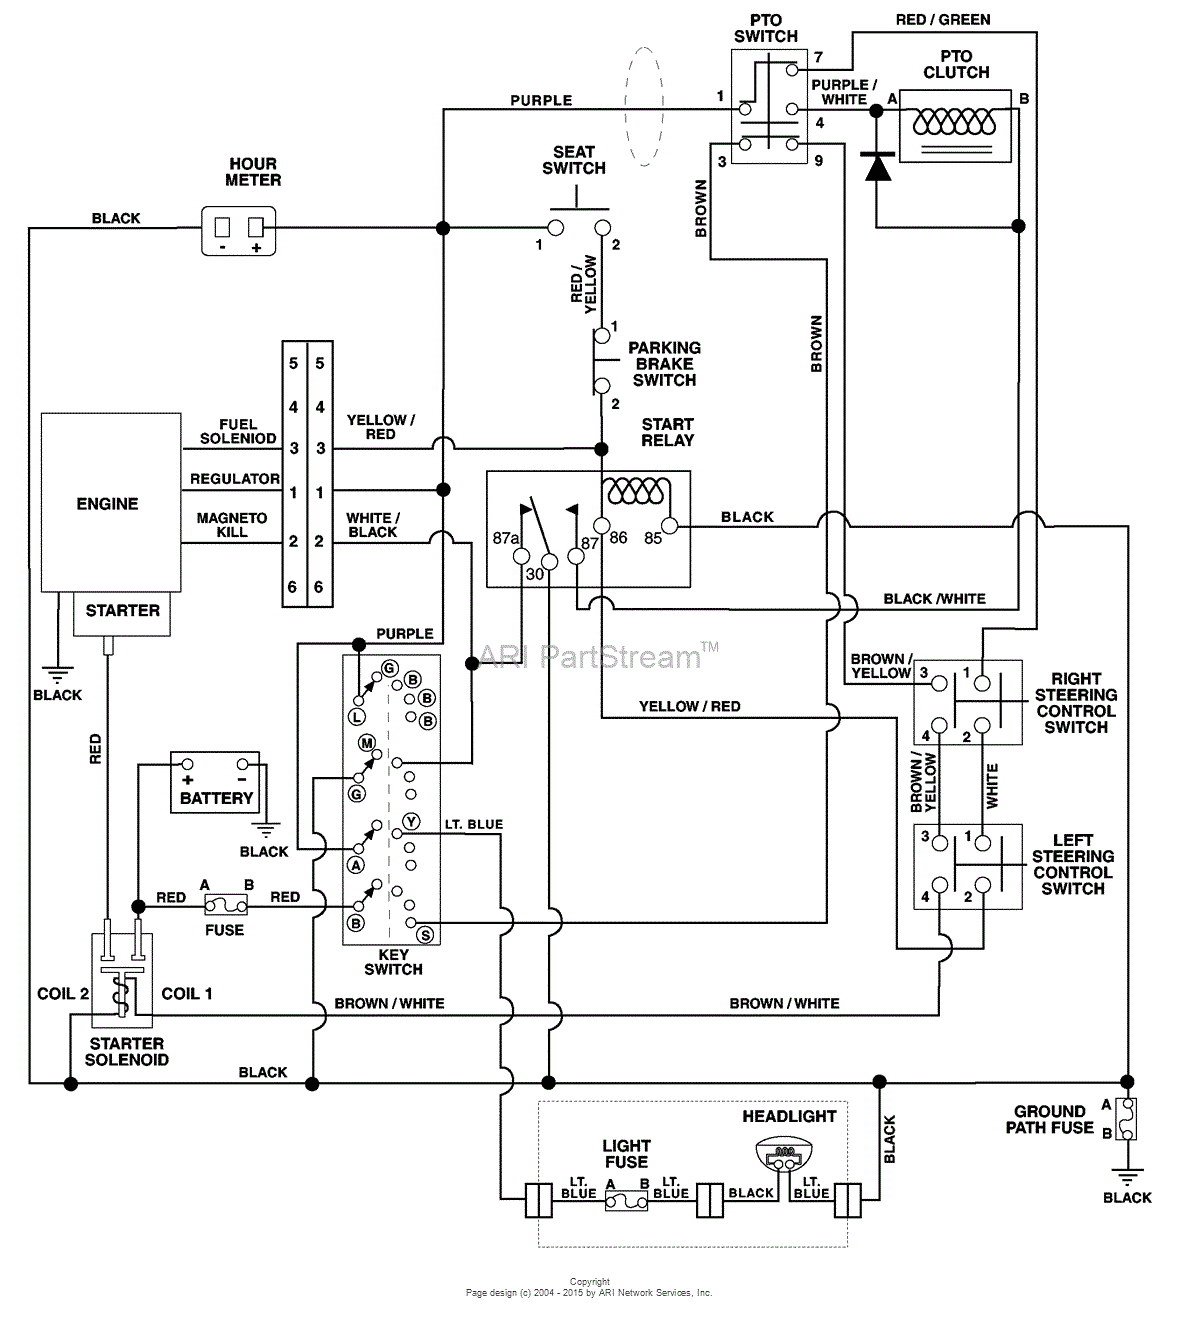 wrg 6273 onan engine wiring diagram 18 gravely 915044 000101 004999 zt1740 17hp kohler 40